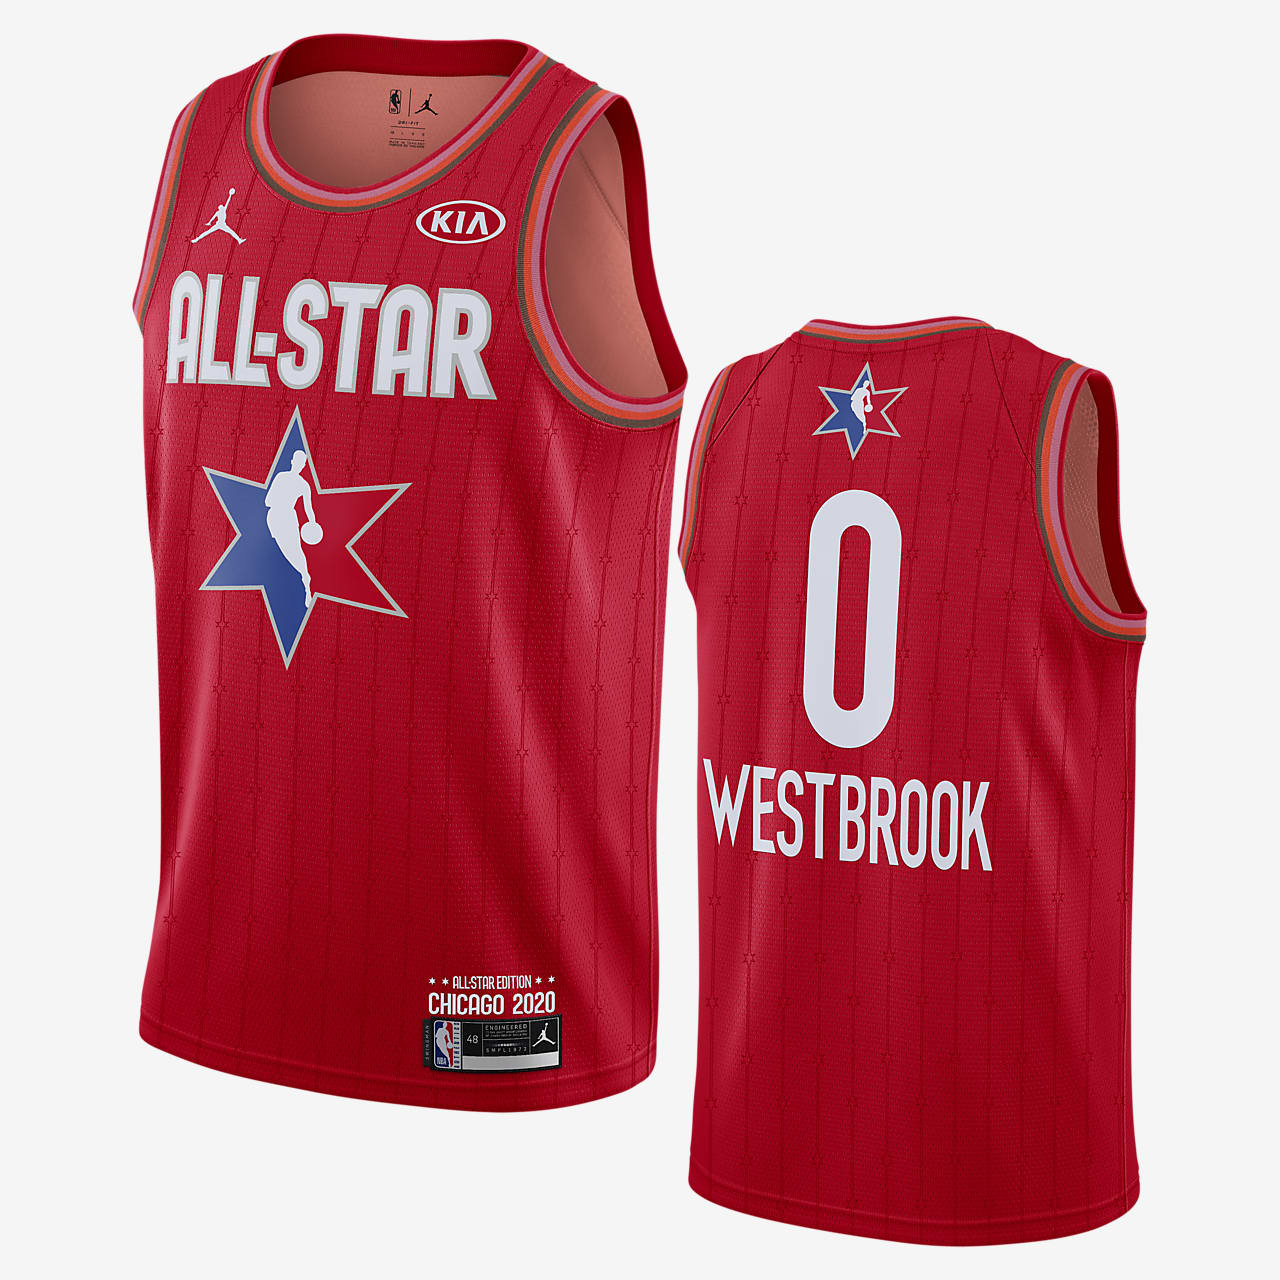 westbrook jersey number